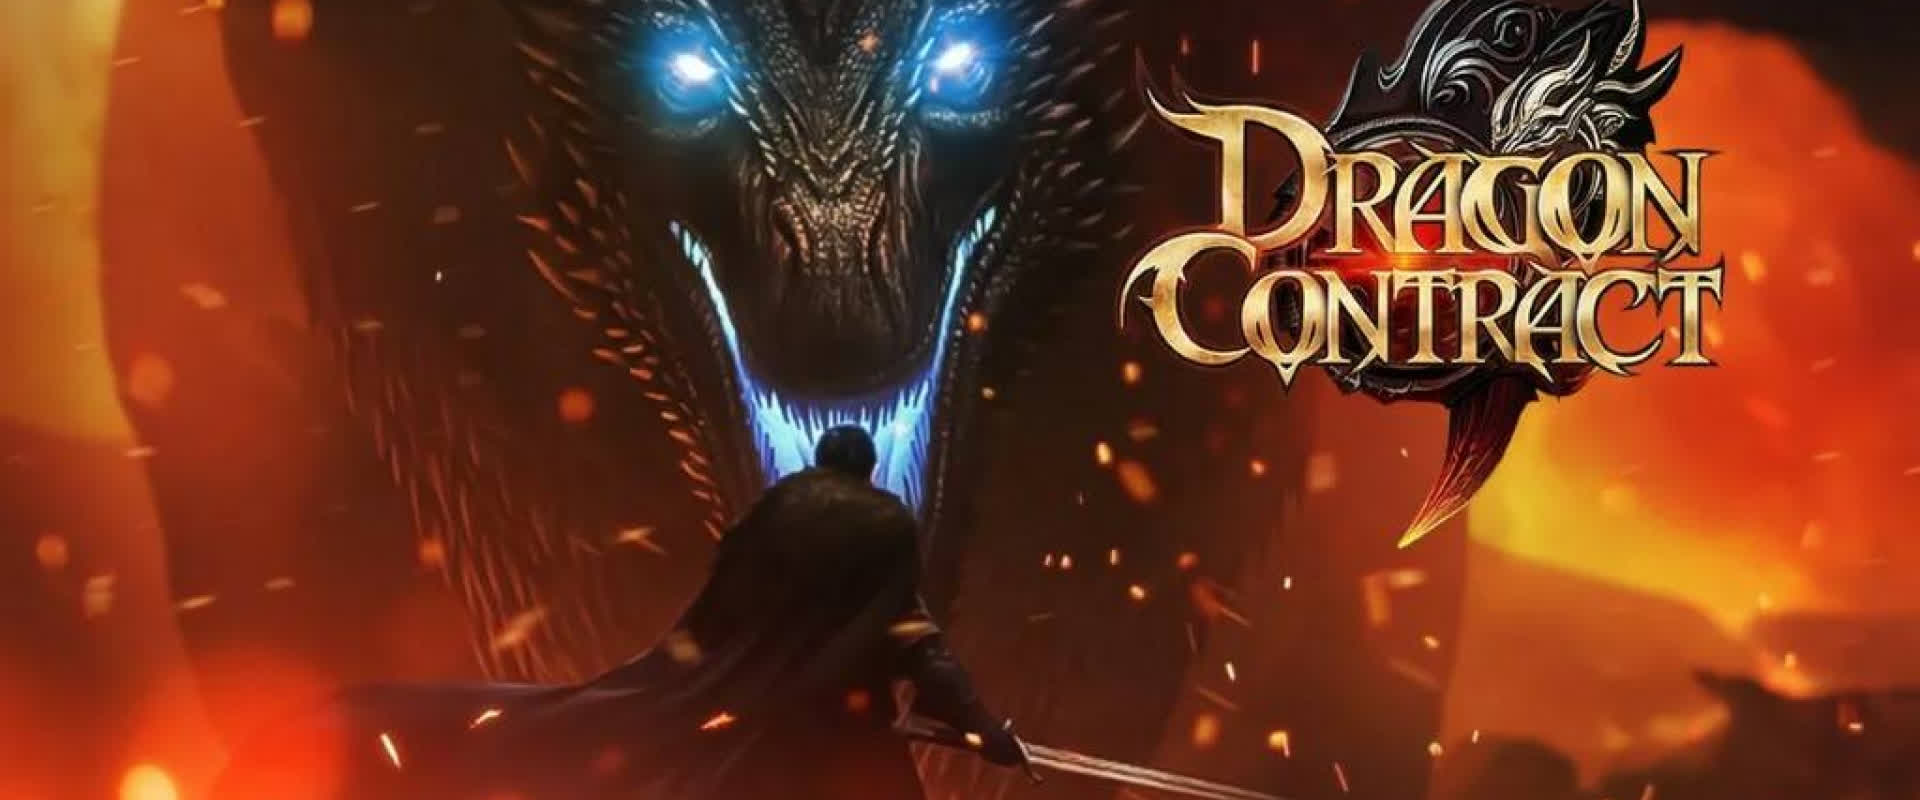 ТОП браузерных игр на андроид - Dragon Contract